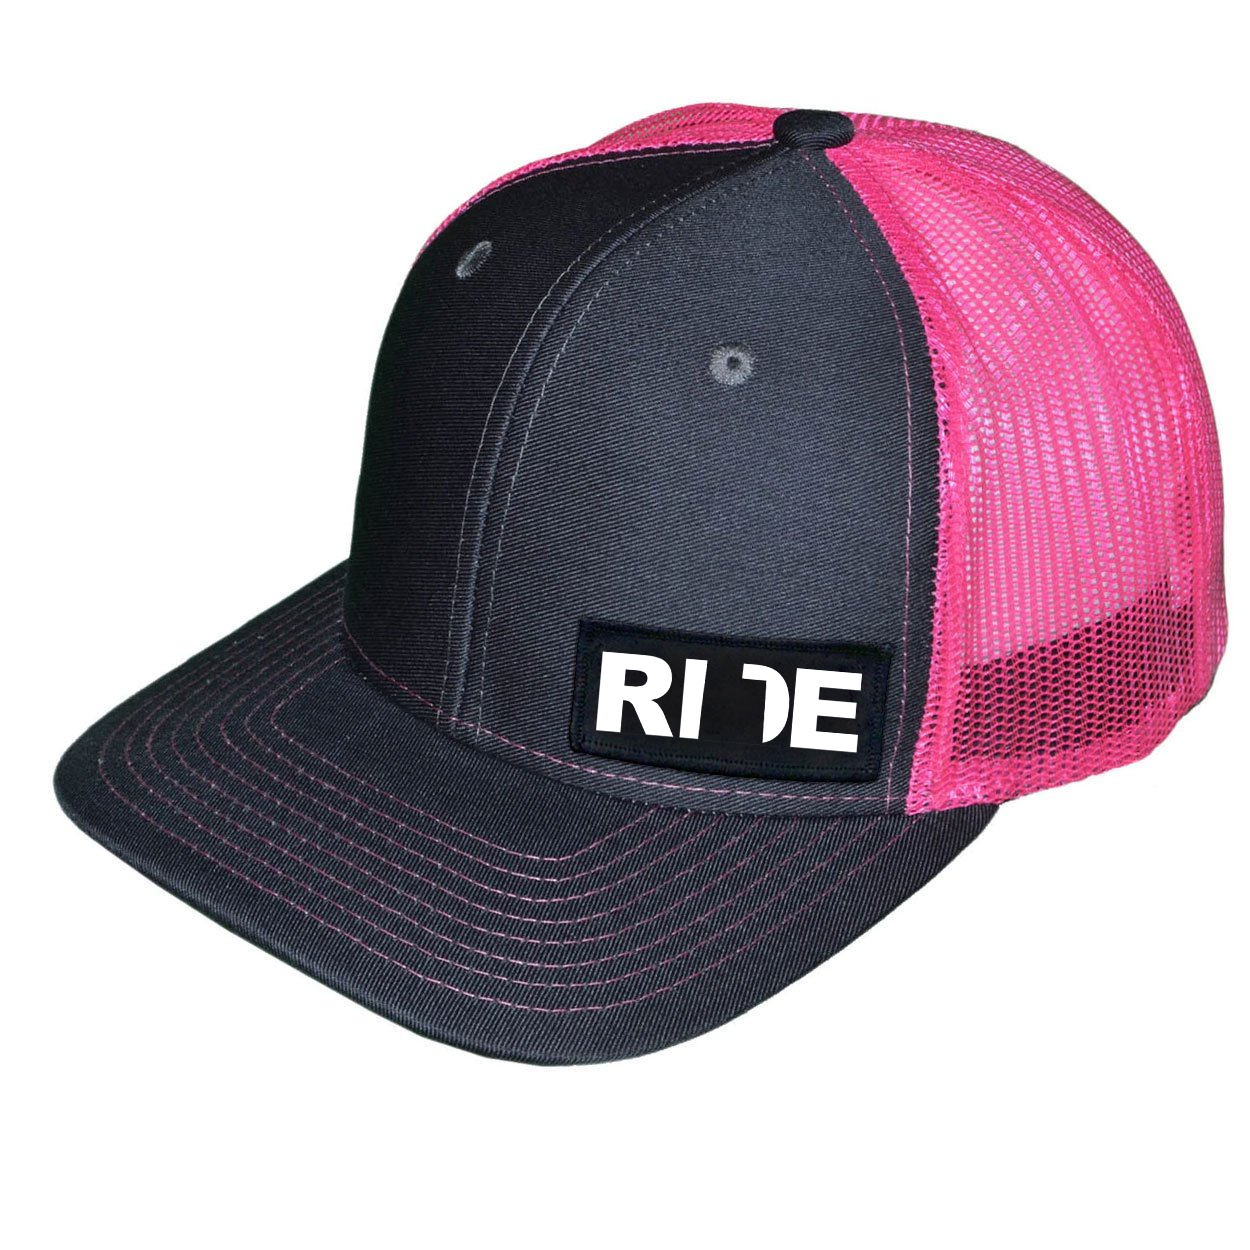 Ride Utah Night Out Woven Patch Snapback Trucker Hat Dark Gray/Neon Pink (White Logo)